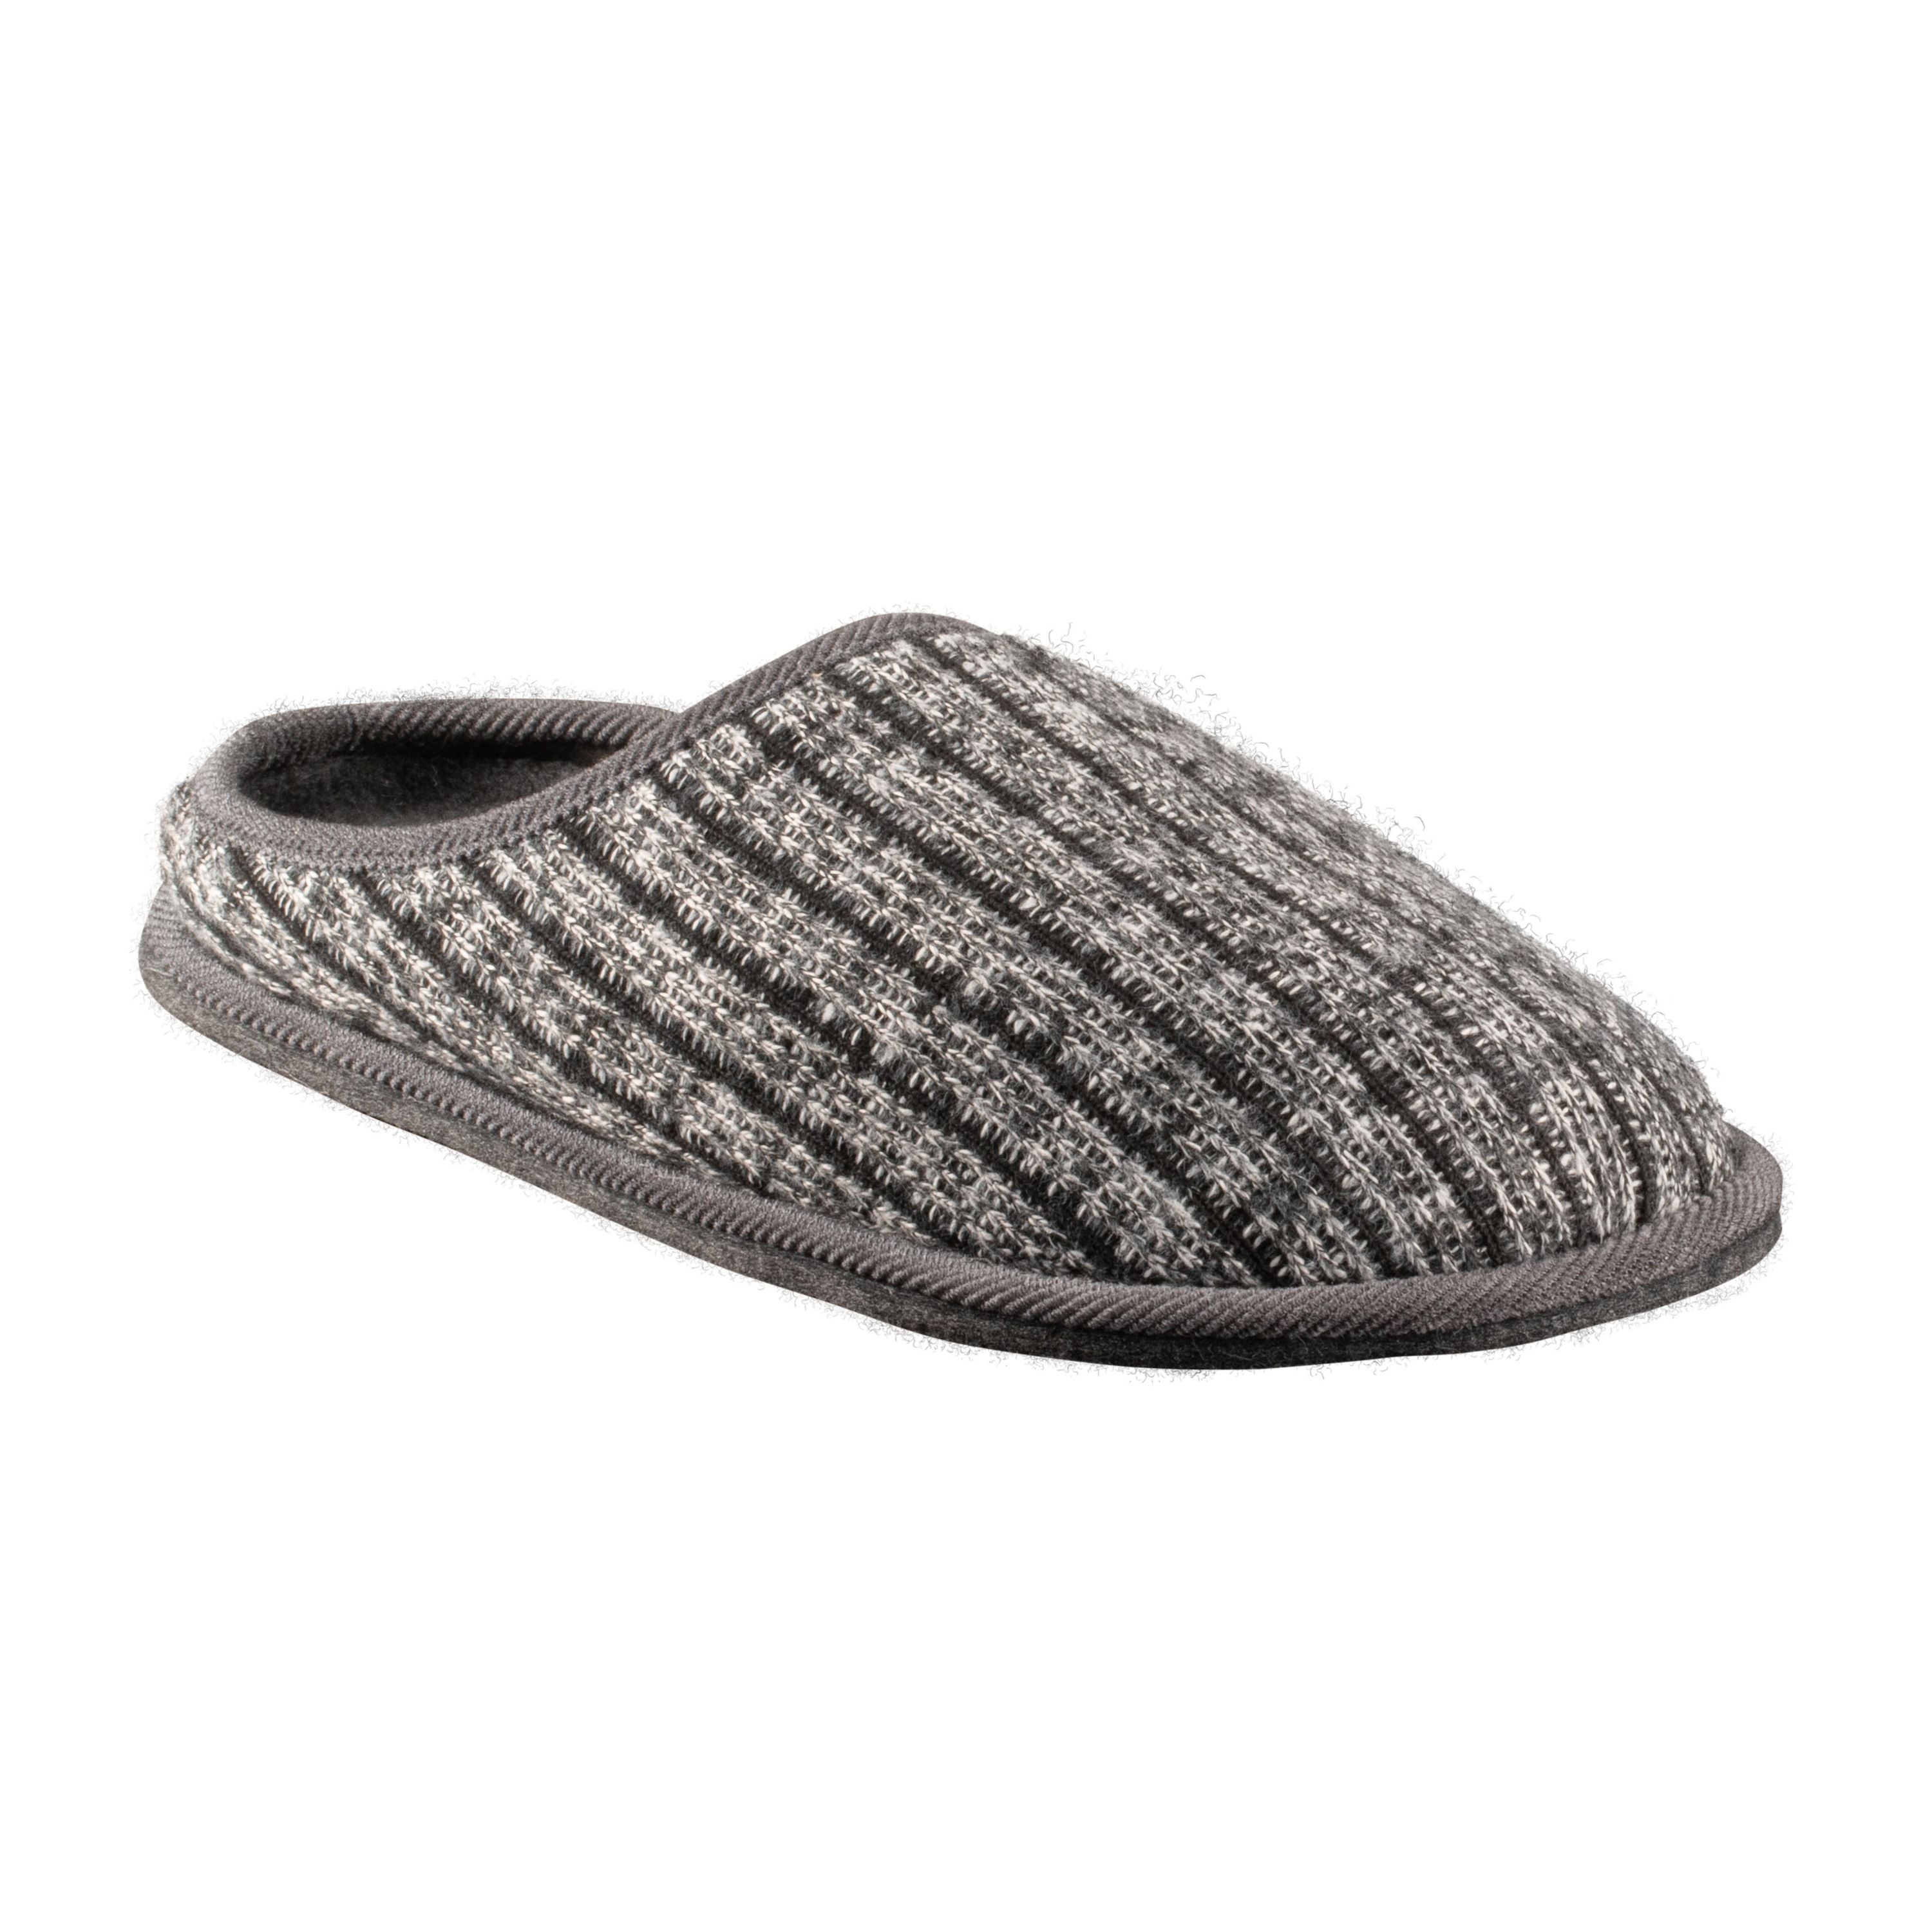 "Grainau" acrylic slippers - Men's